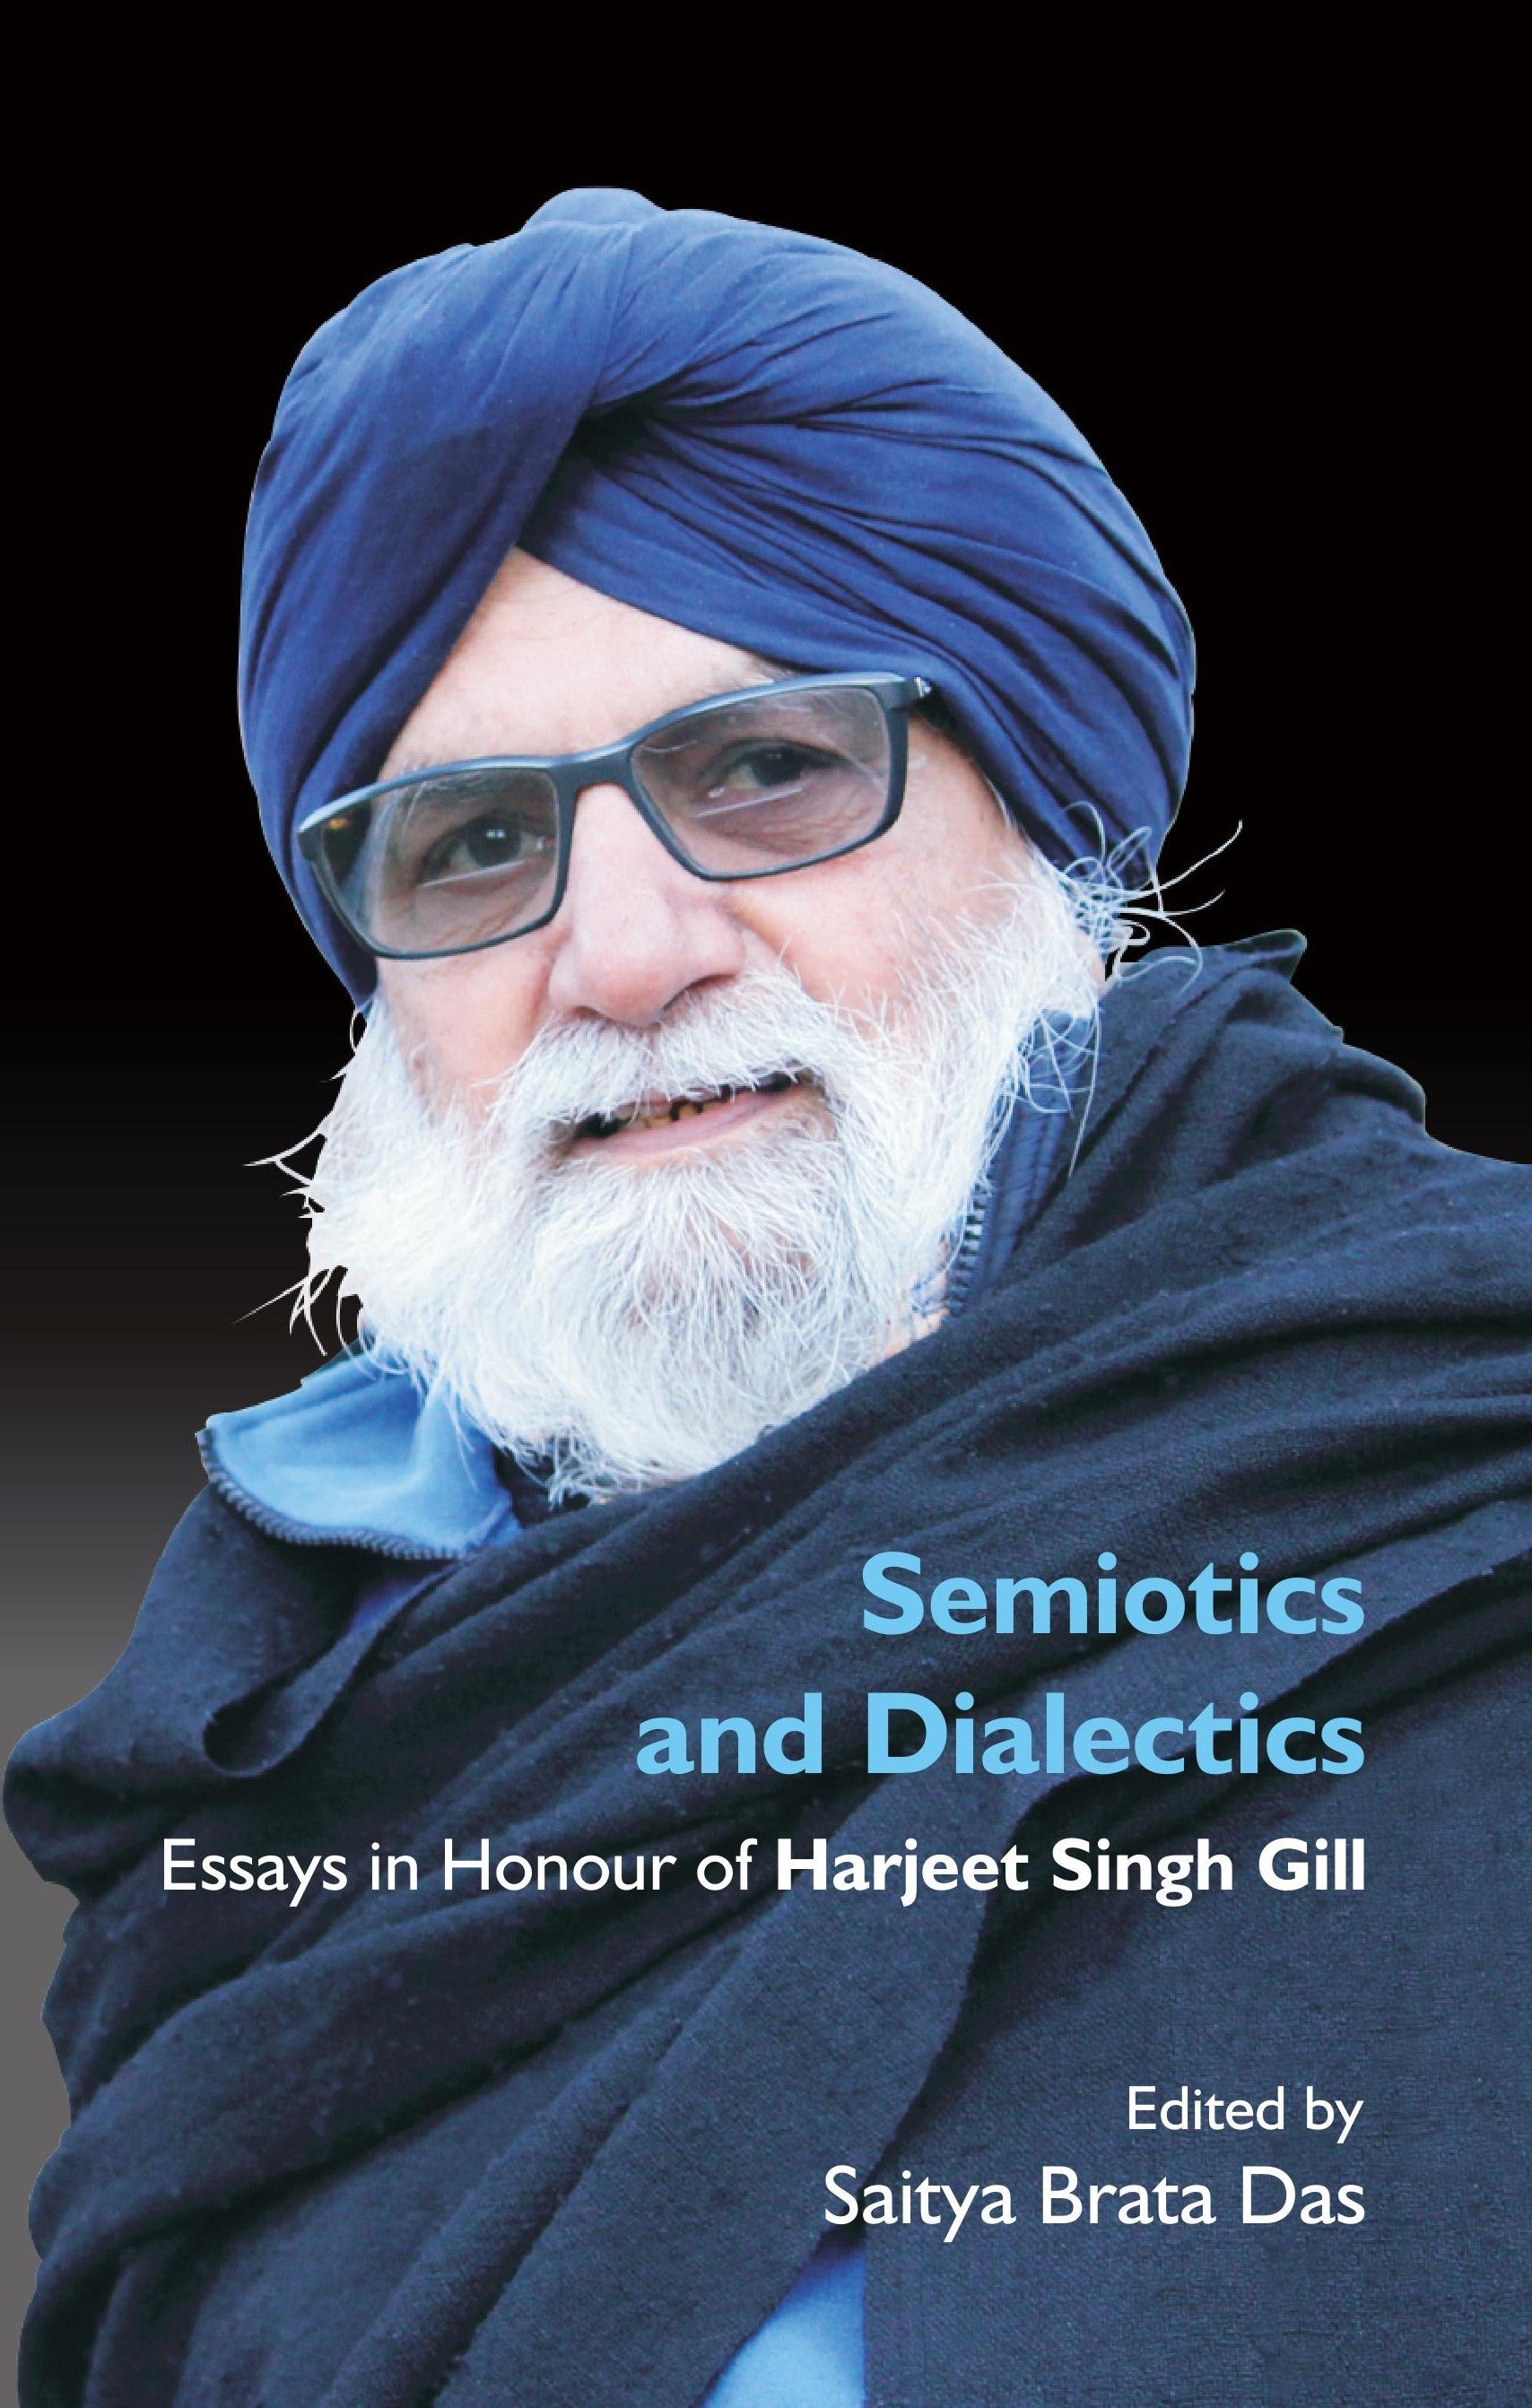 Semiotics and Dialectics: Essays in Honour of Harjeet Singh Gill